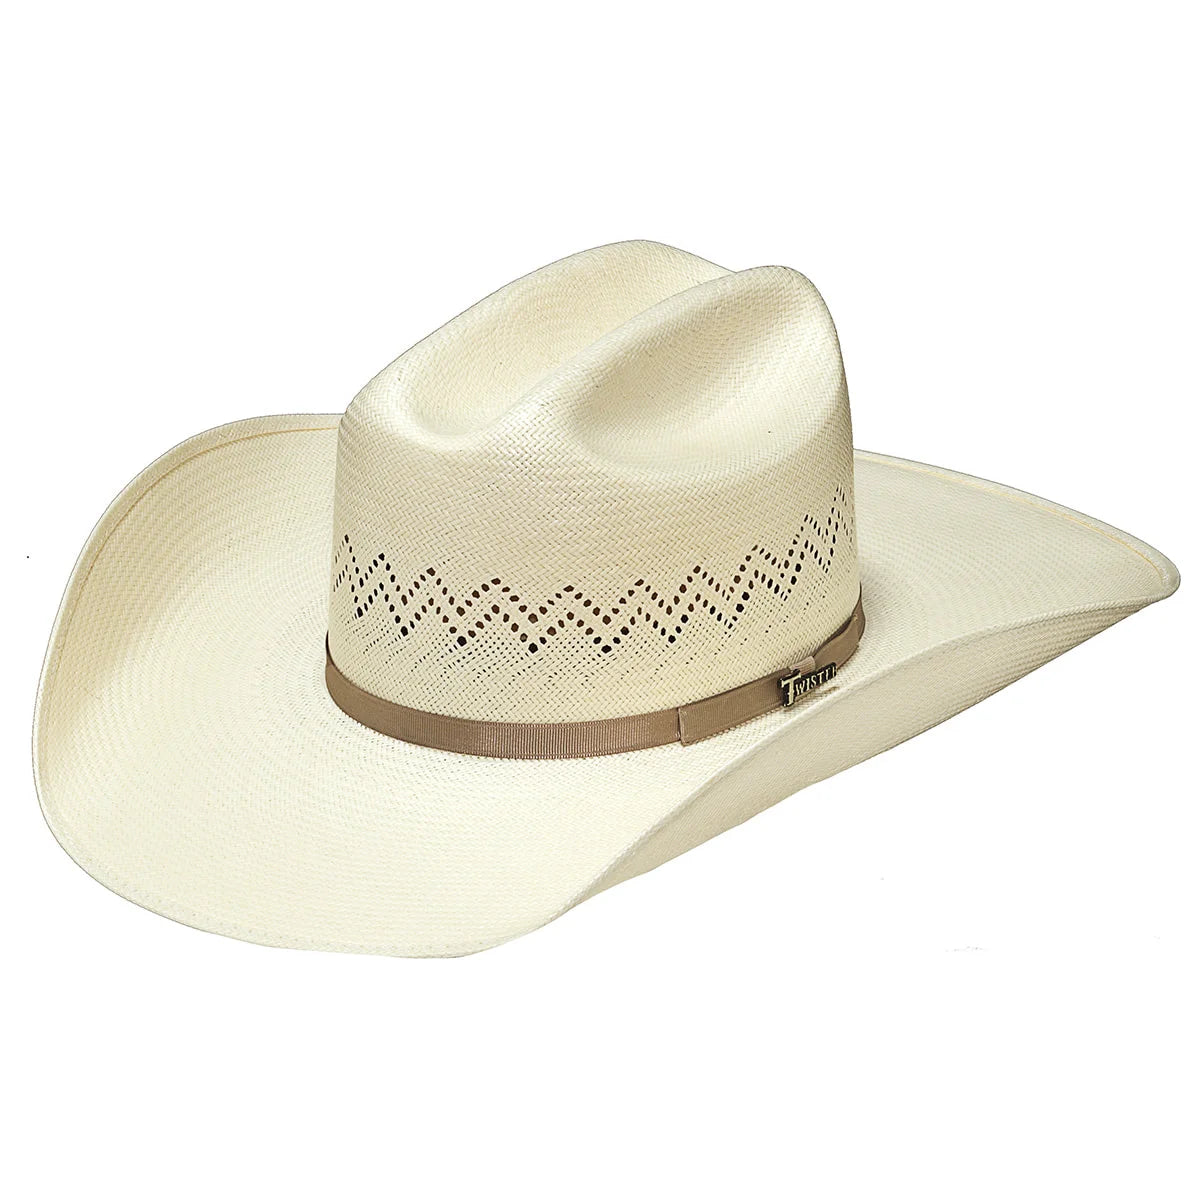 Twister Shangtung 30X Straw Cowboy Hat - Natural